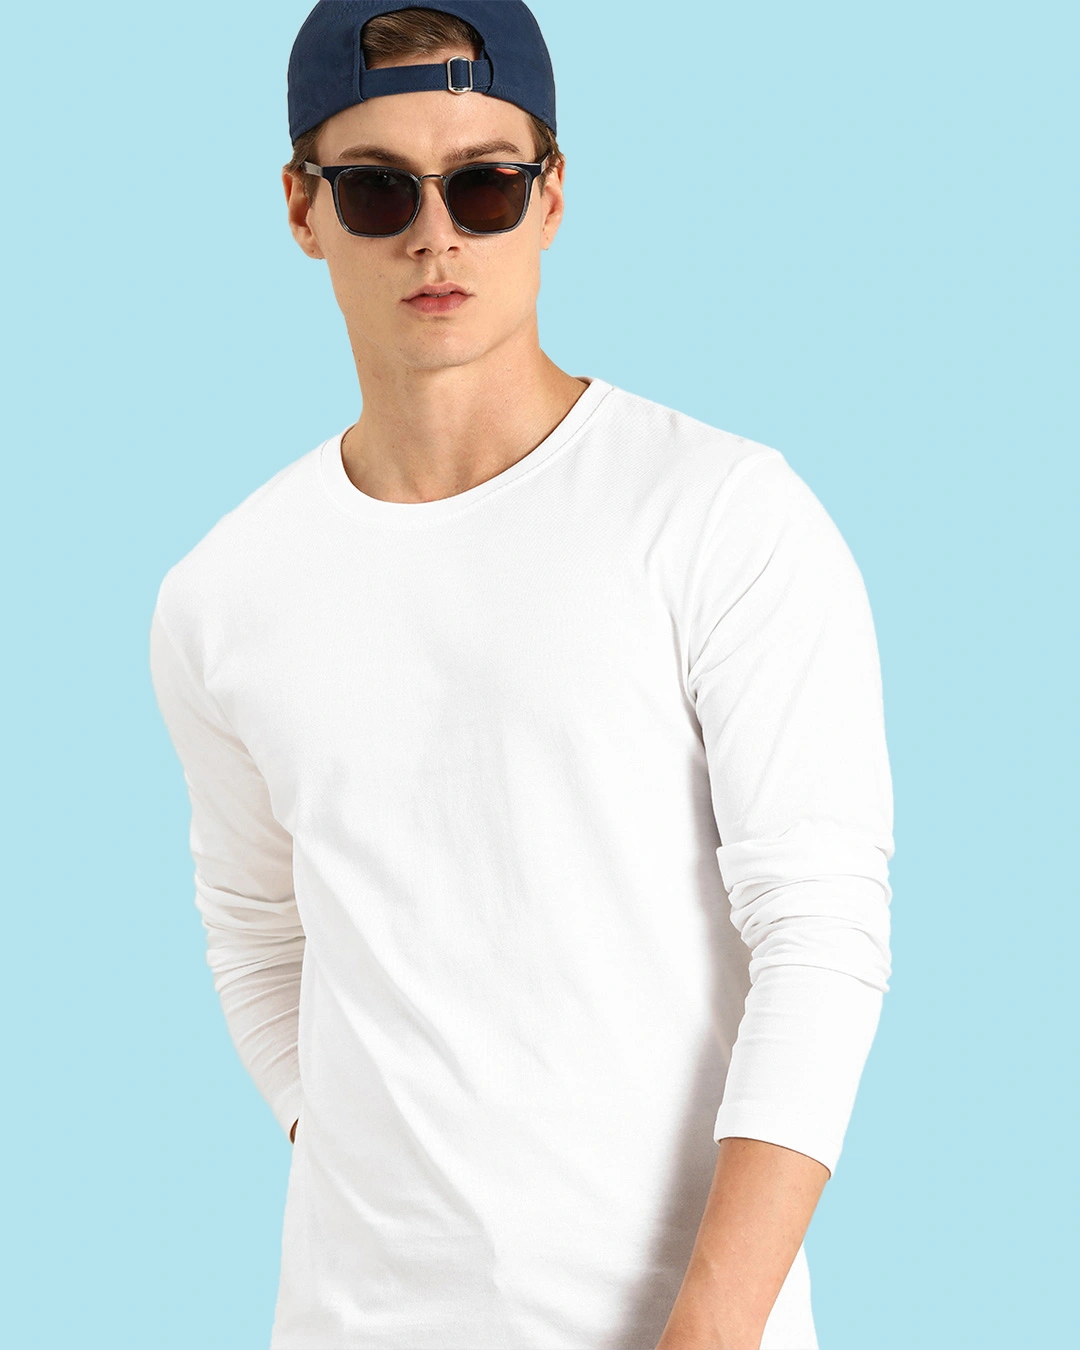 men-s-white-t-shirt